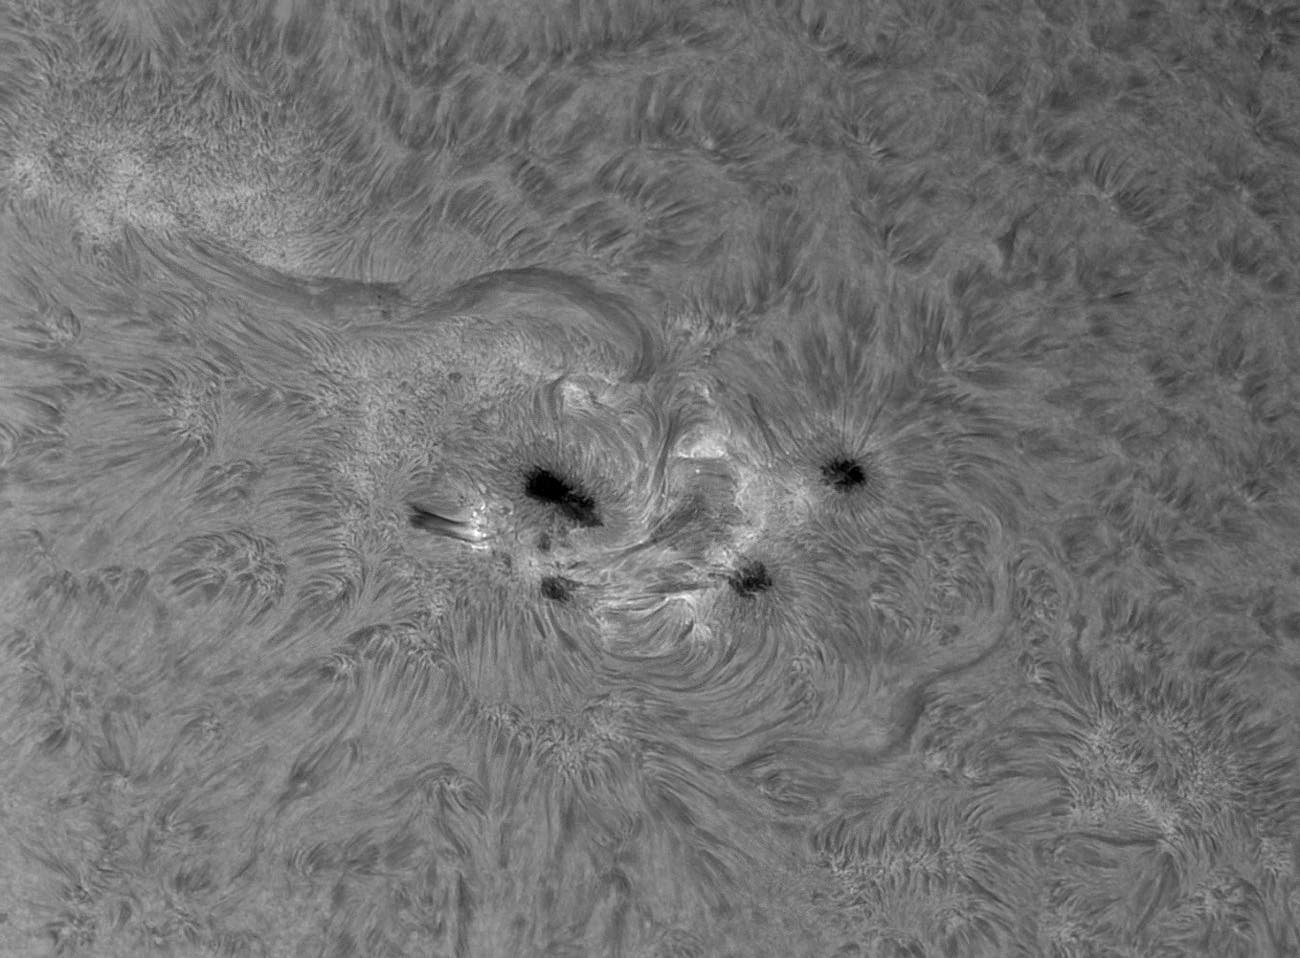 H-alpha-Sonne am 5. März 2011 - Detailansicht